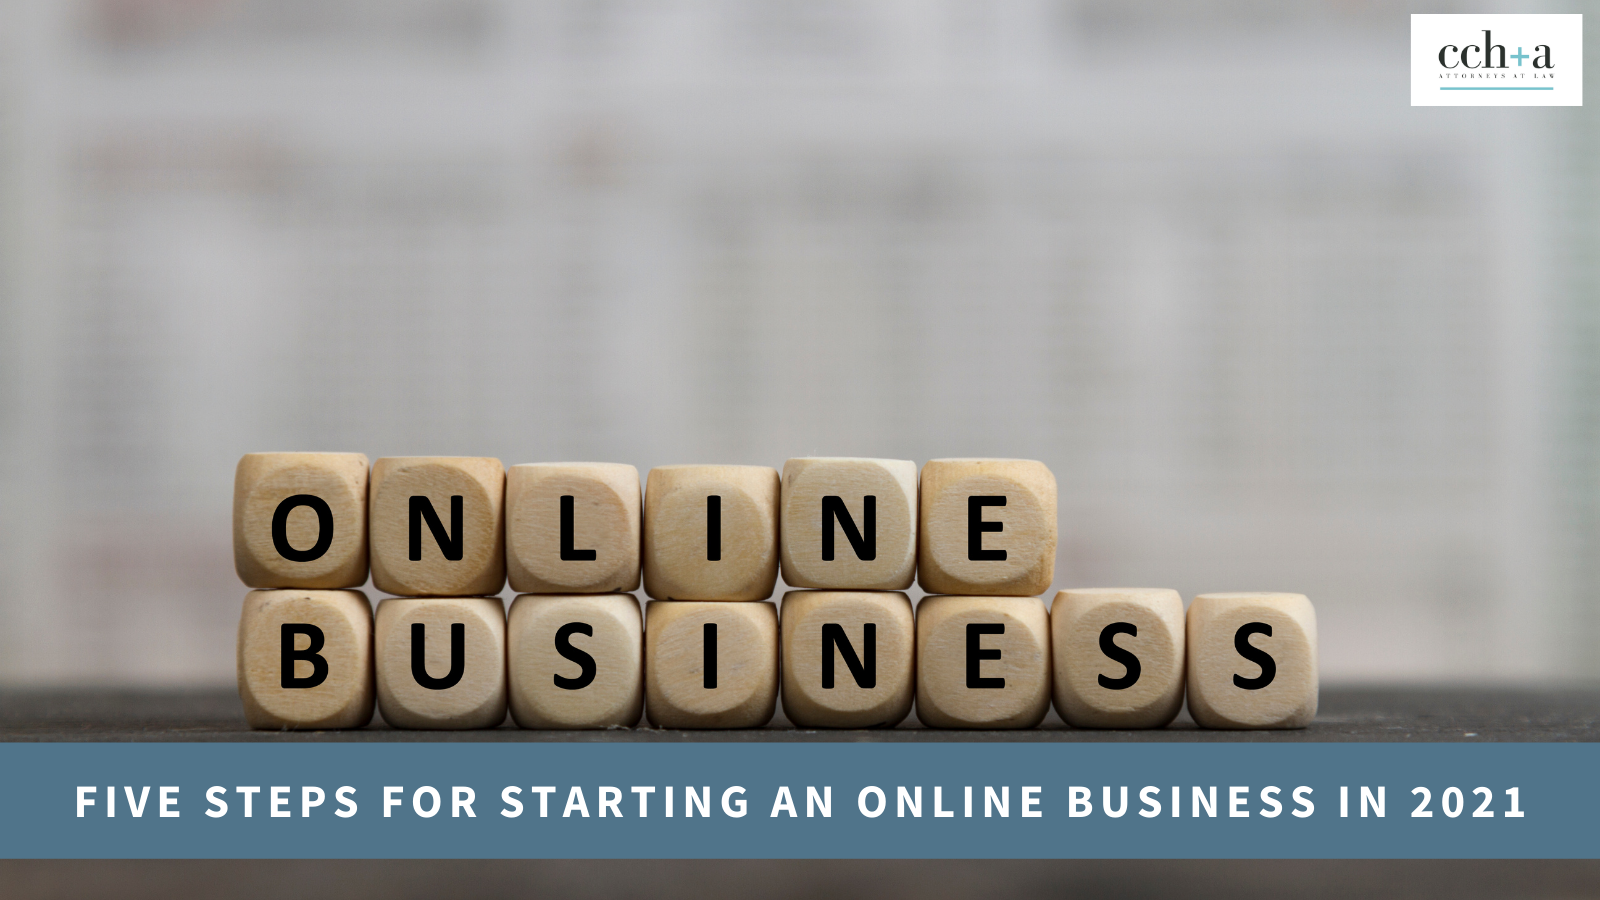 Ccha november 2020 Five steps for starting an online business in 2021 blog image 1